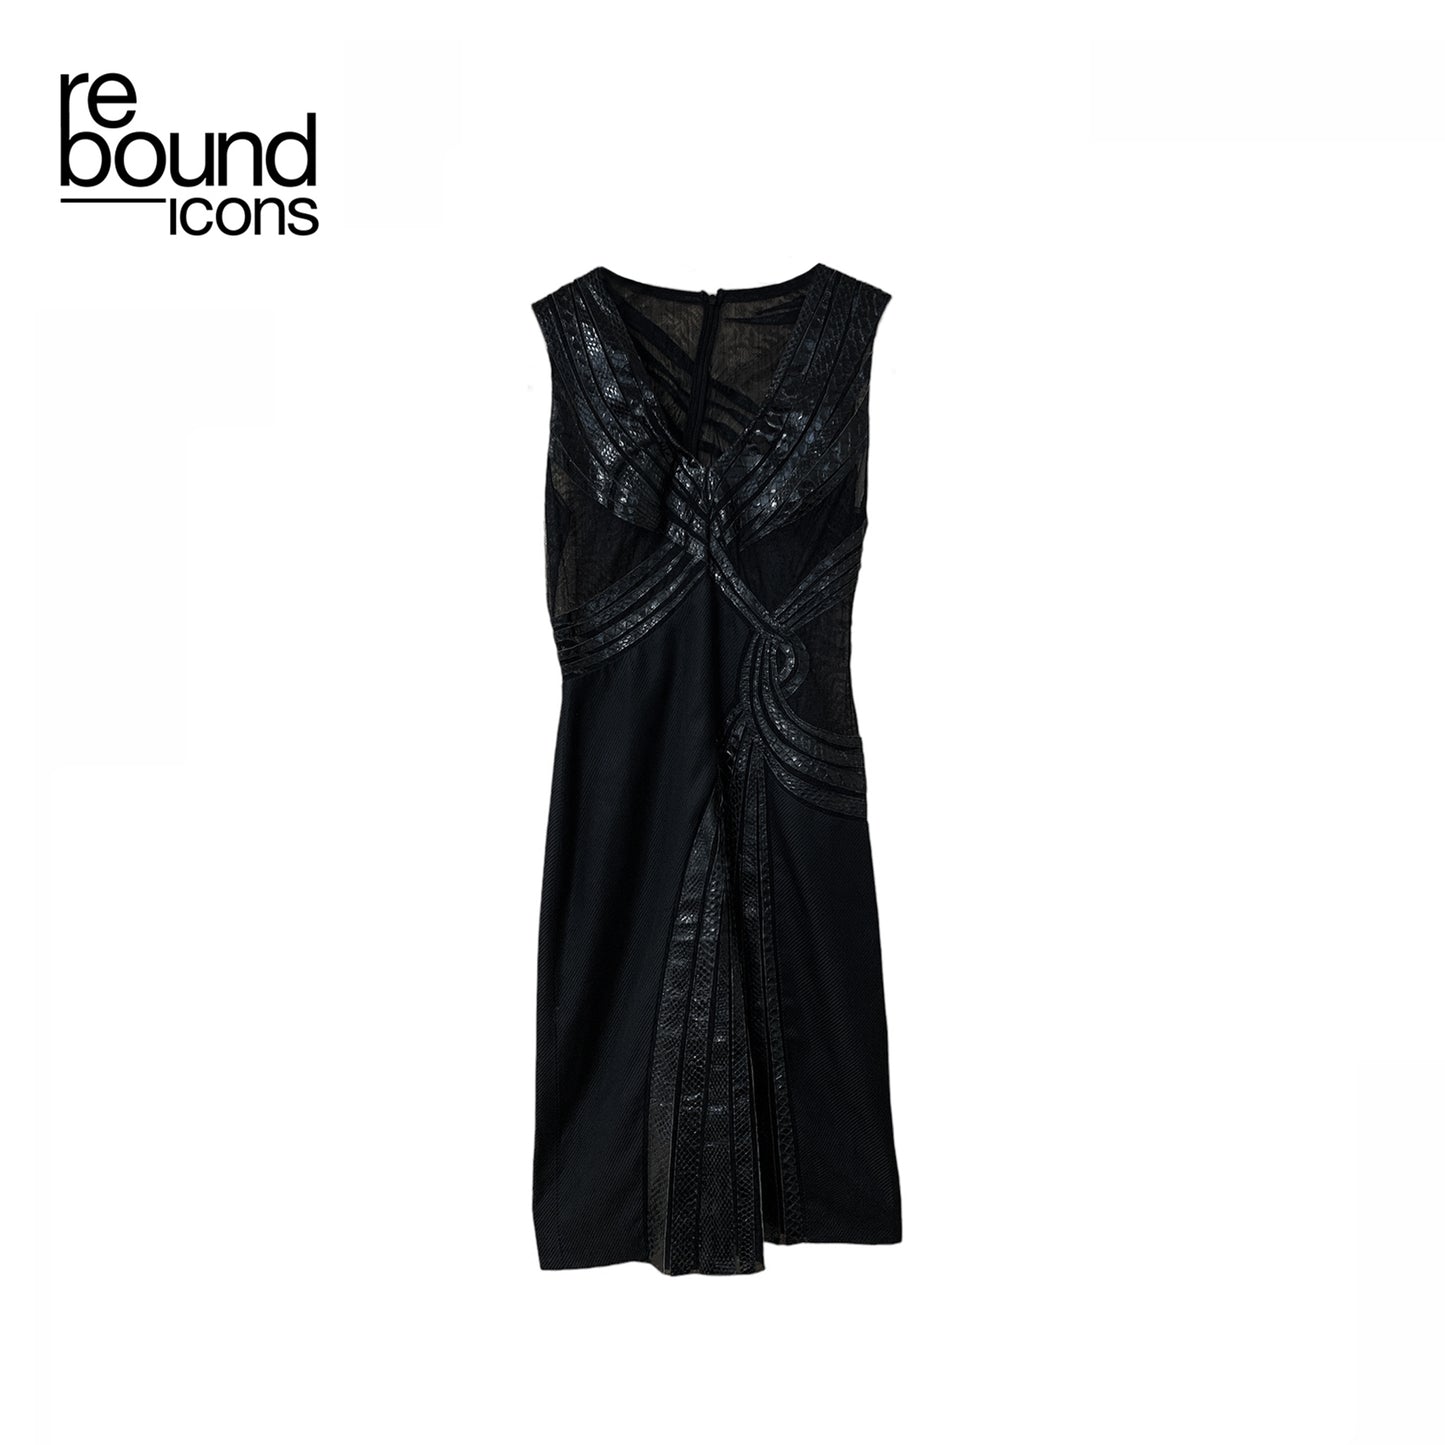 Load image into Gallery viewer, VIntage Gianni Versace Black Snakeskin Dress
